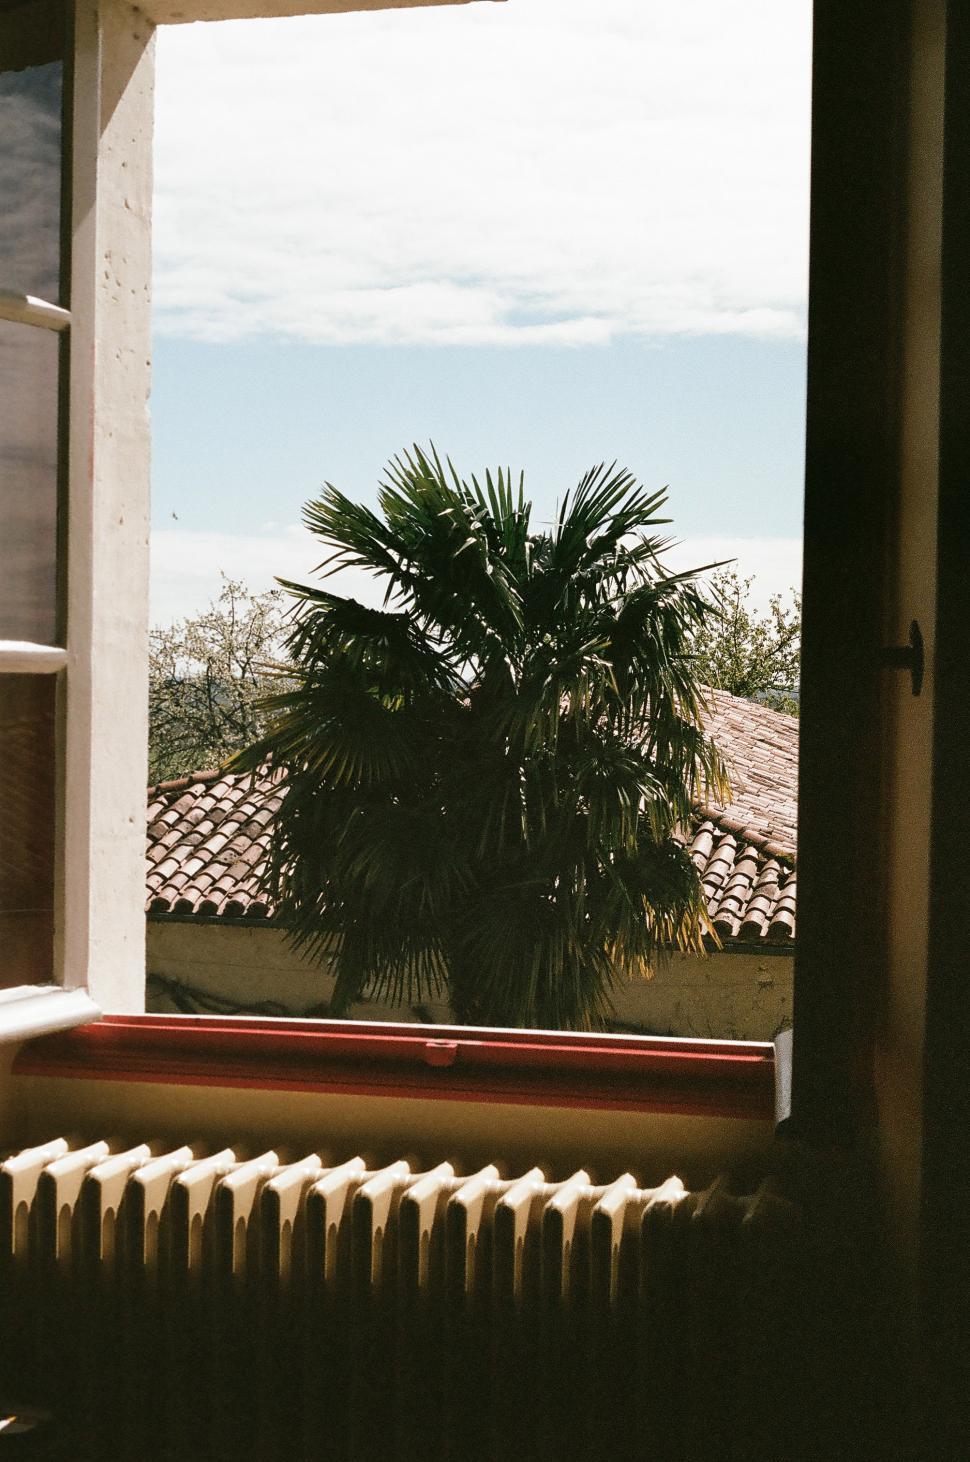 Free Image of Palm Tree Viewed Through Window 